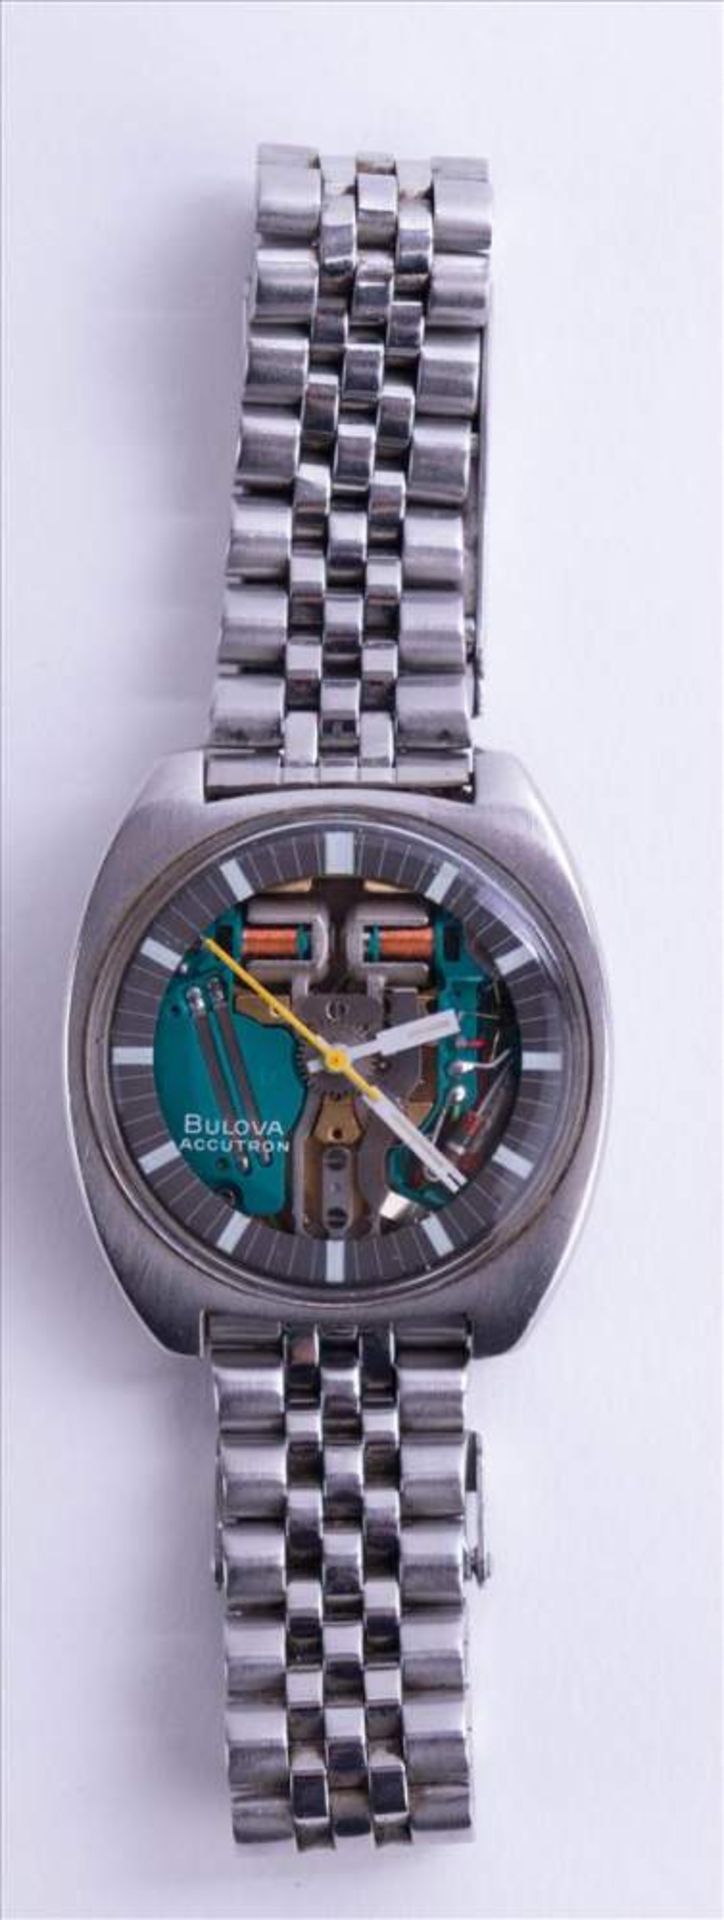 Bulova Herrenuhr Accutron um 1970/80 / Bulova Men's watch Accutron, about 1970/80 Stahlarmband,